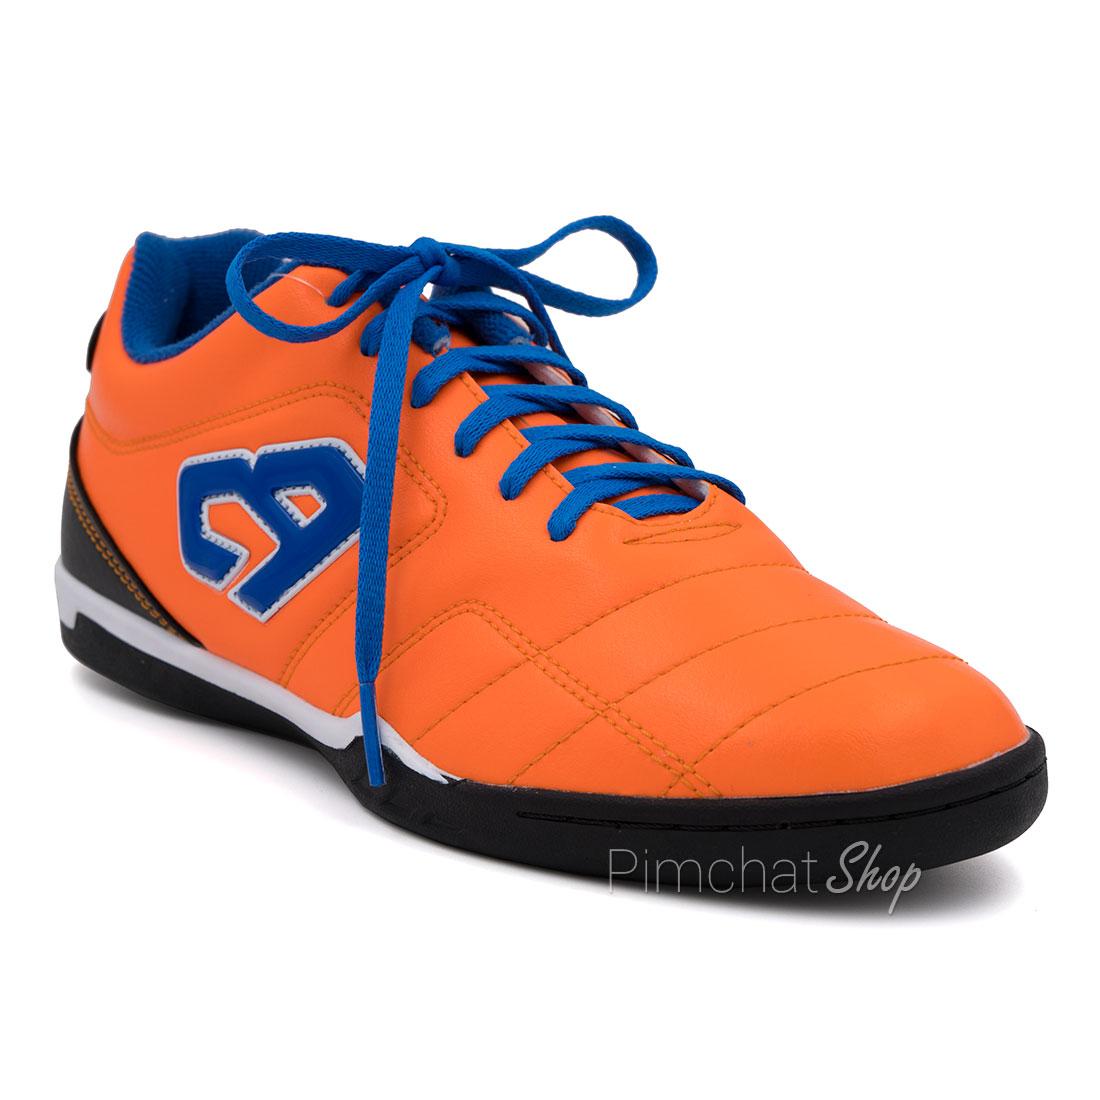 Breaker รองเท้ากีฬา รองเท้าฟุตซอล รุ่น BK114 สีส้ม